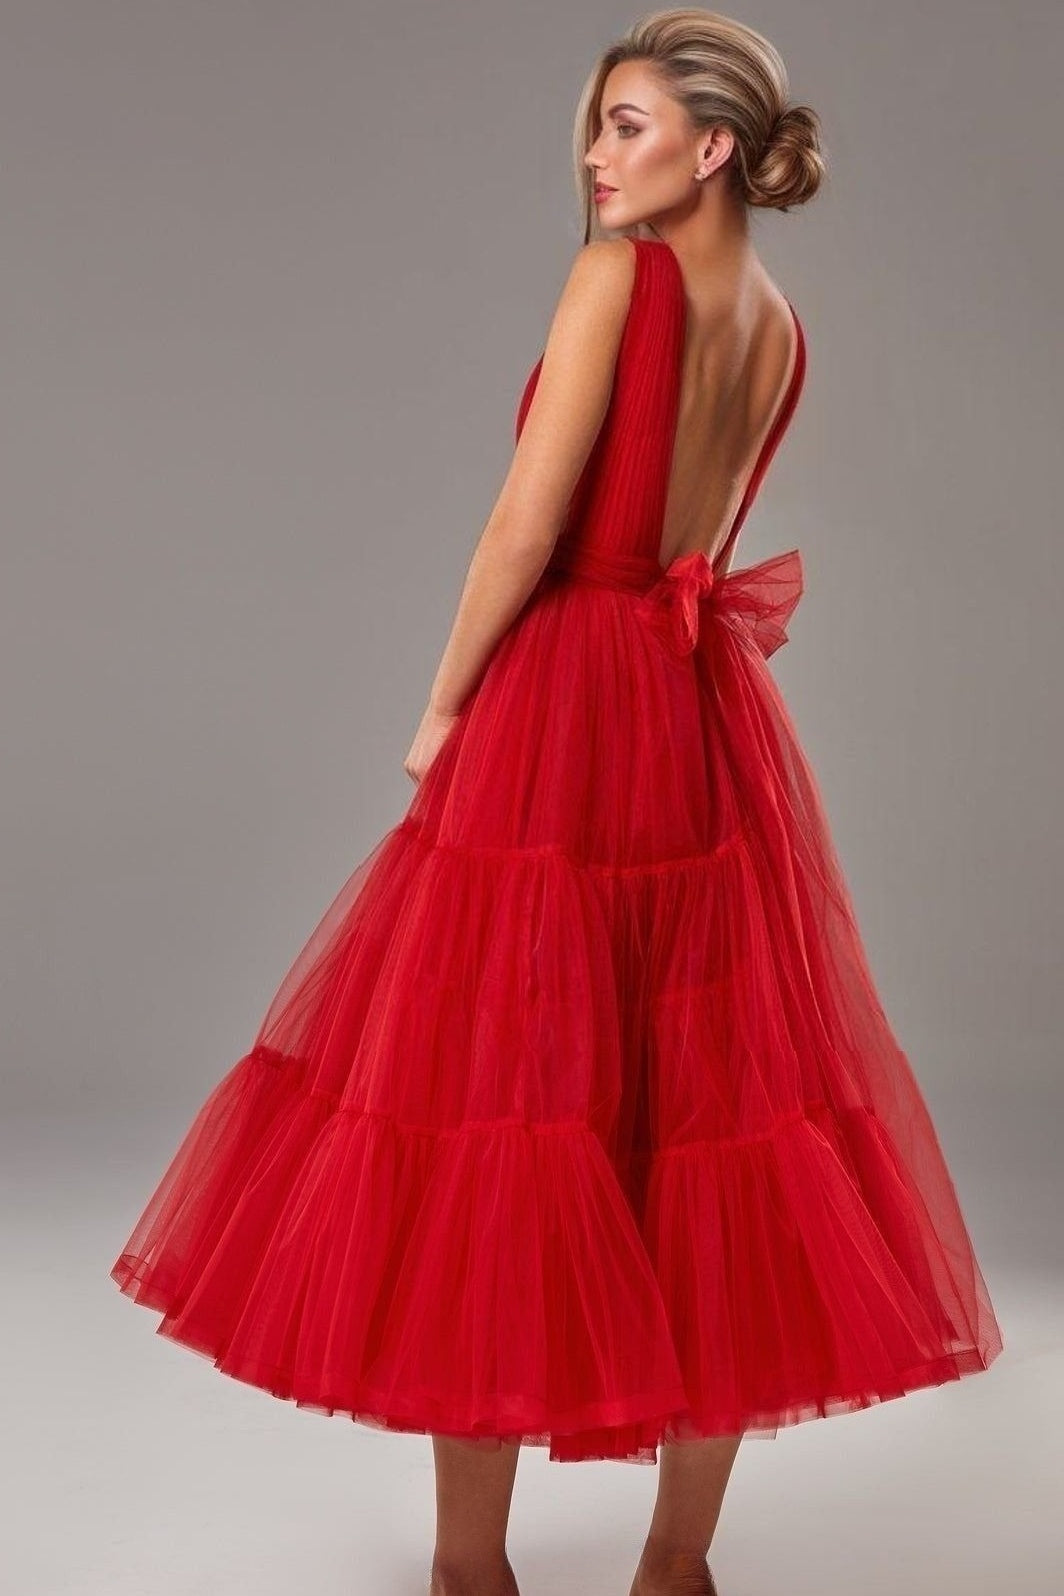 ZARA Formal Couture Dress